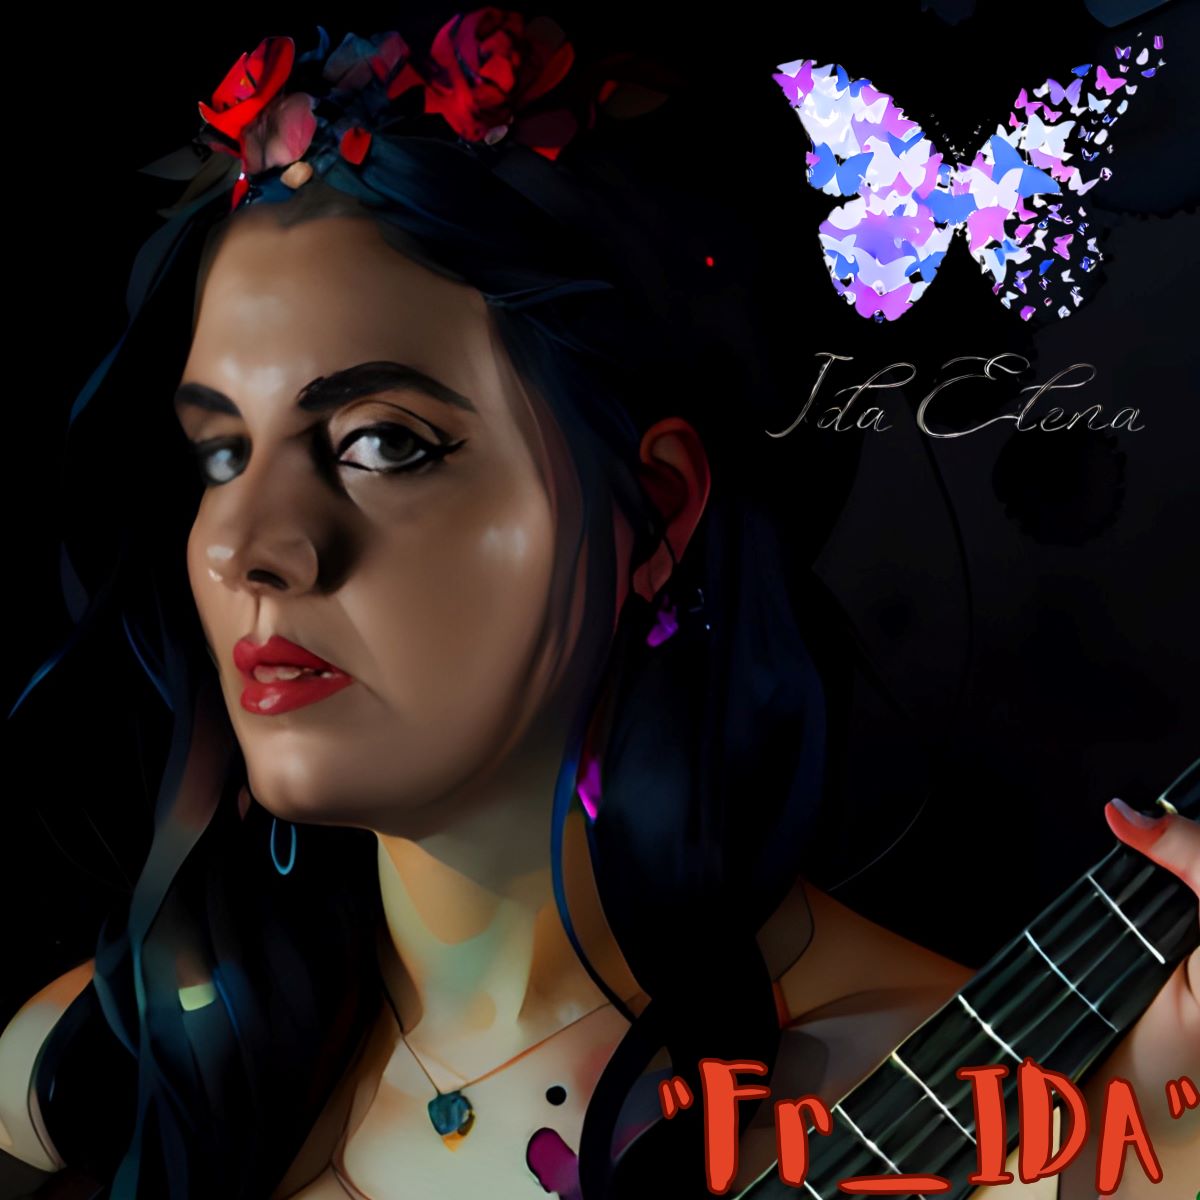 Ida Elena - Il nuovo singolo “Fr_ida”